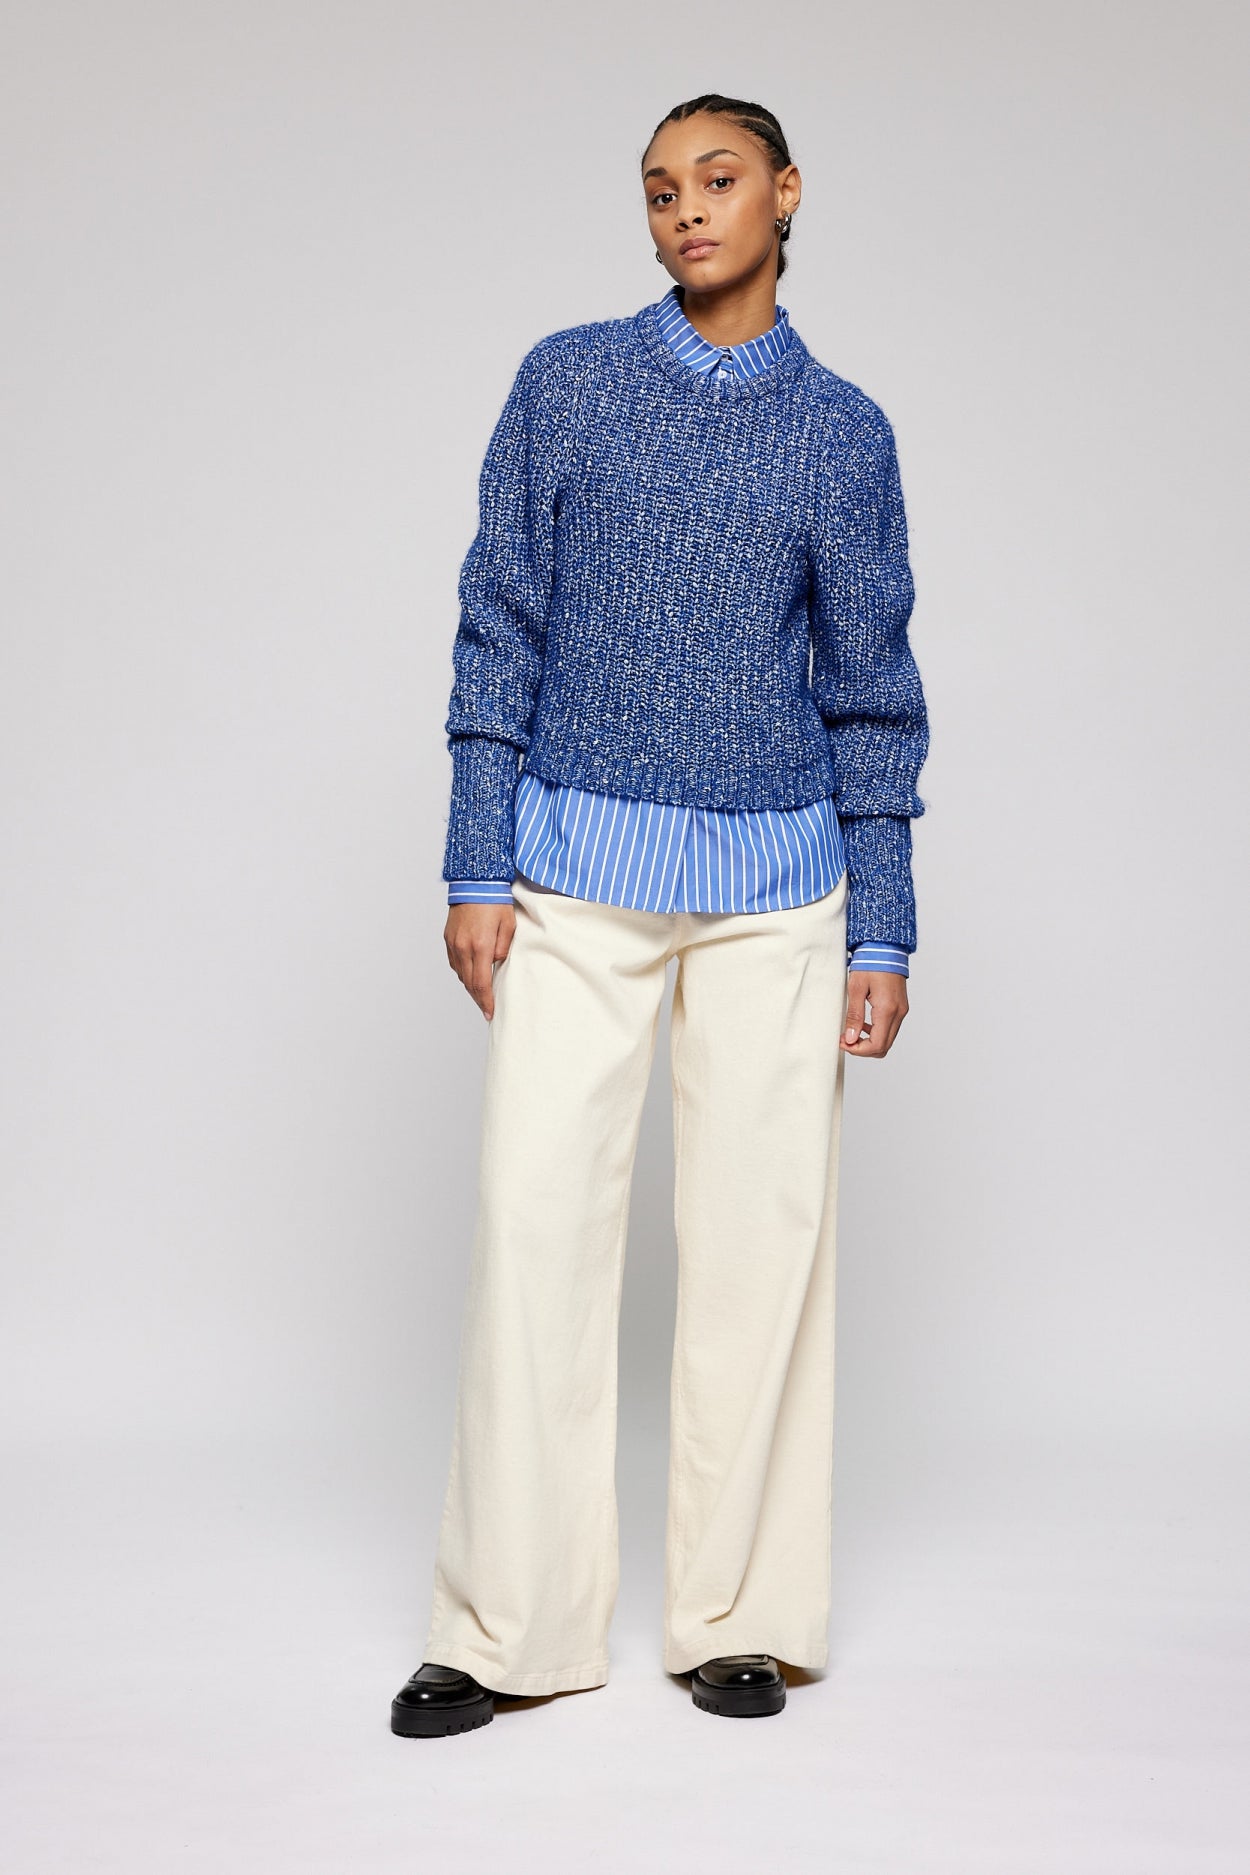 KANTA pullover | GREYISH BLUE